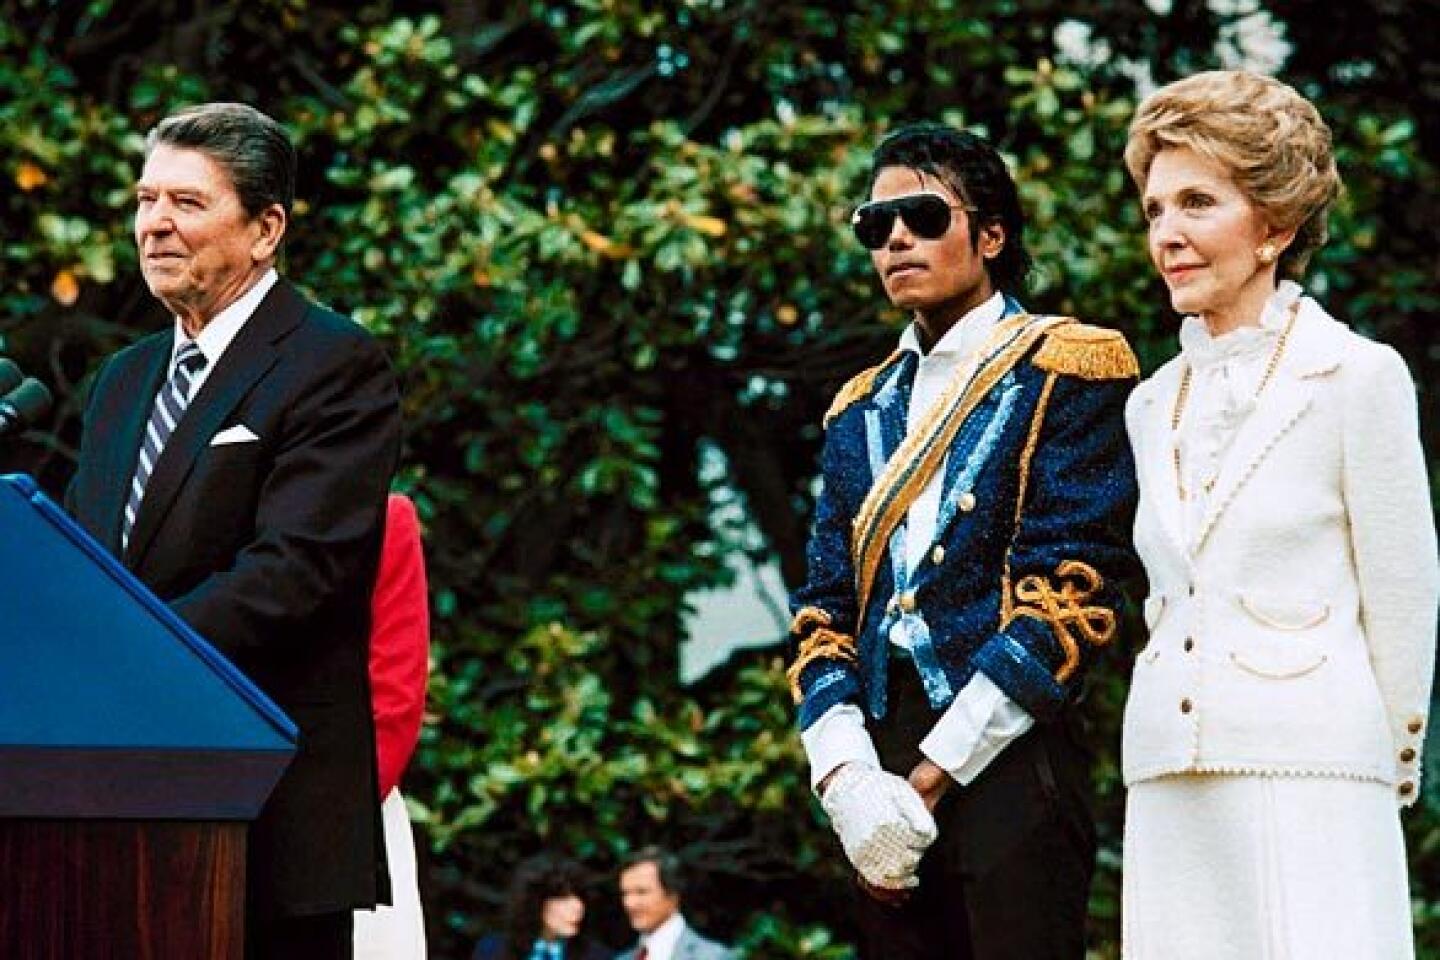 Why did Michael Jackson wear one glove?